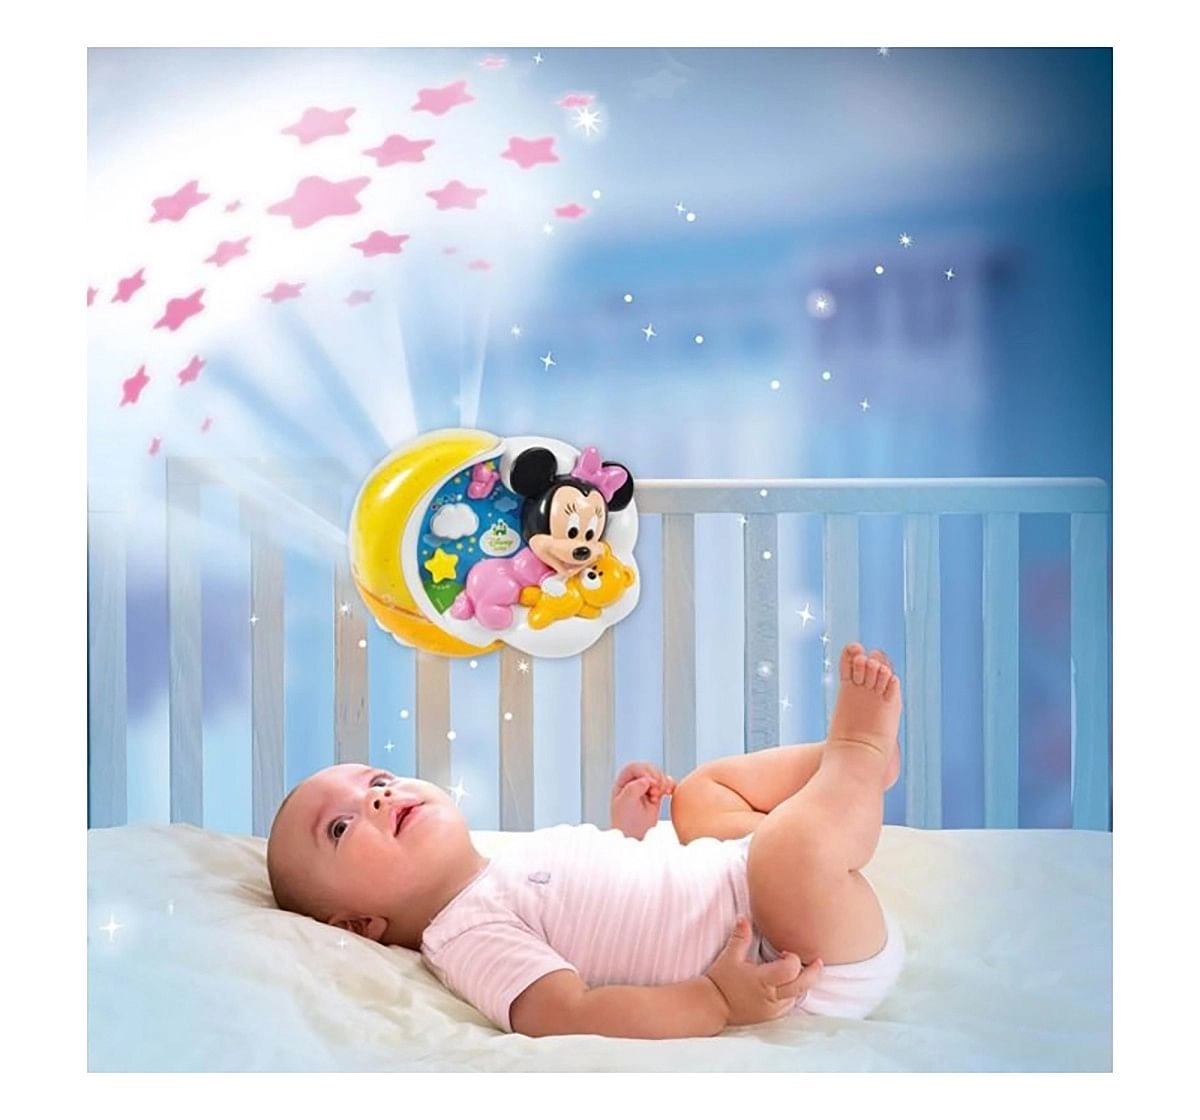  Disney Minnie Projector for New Born age 0M+ 